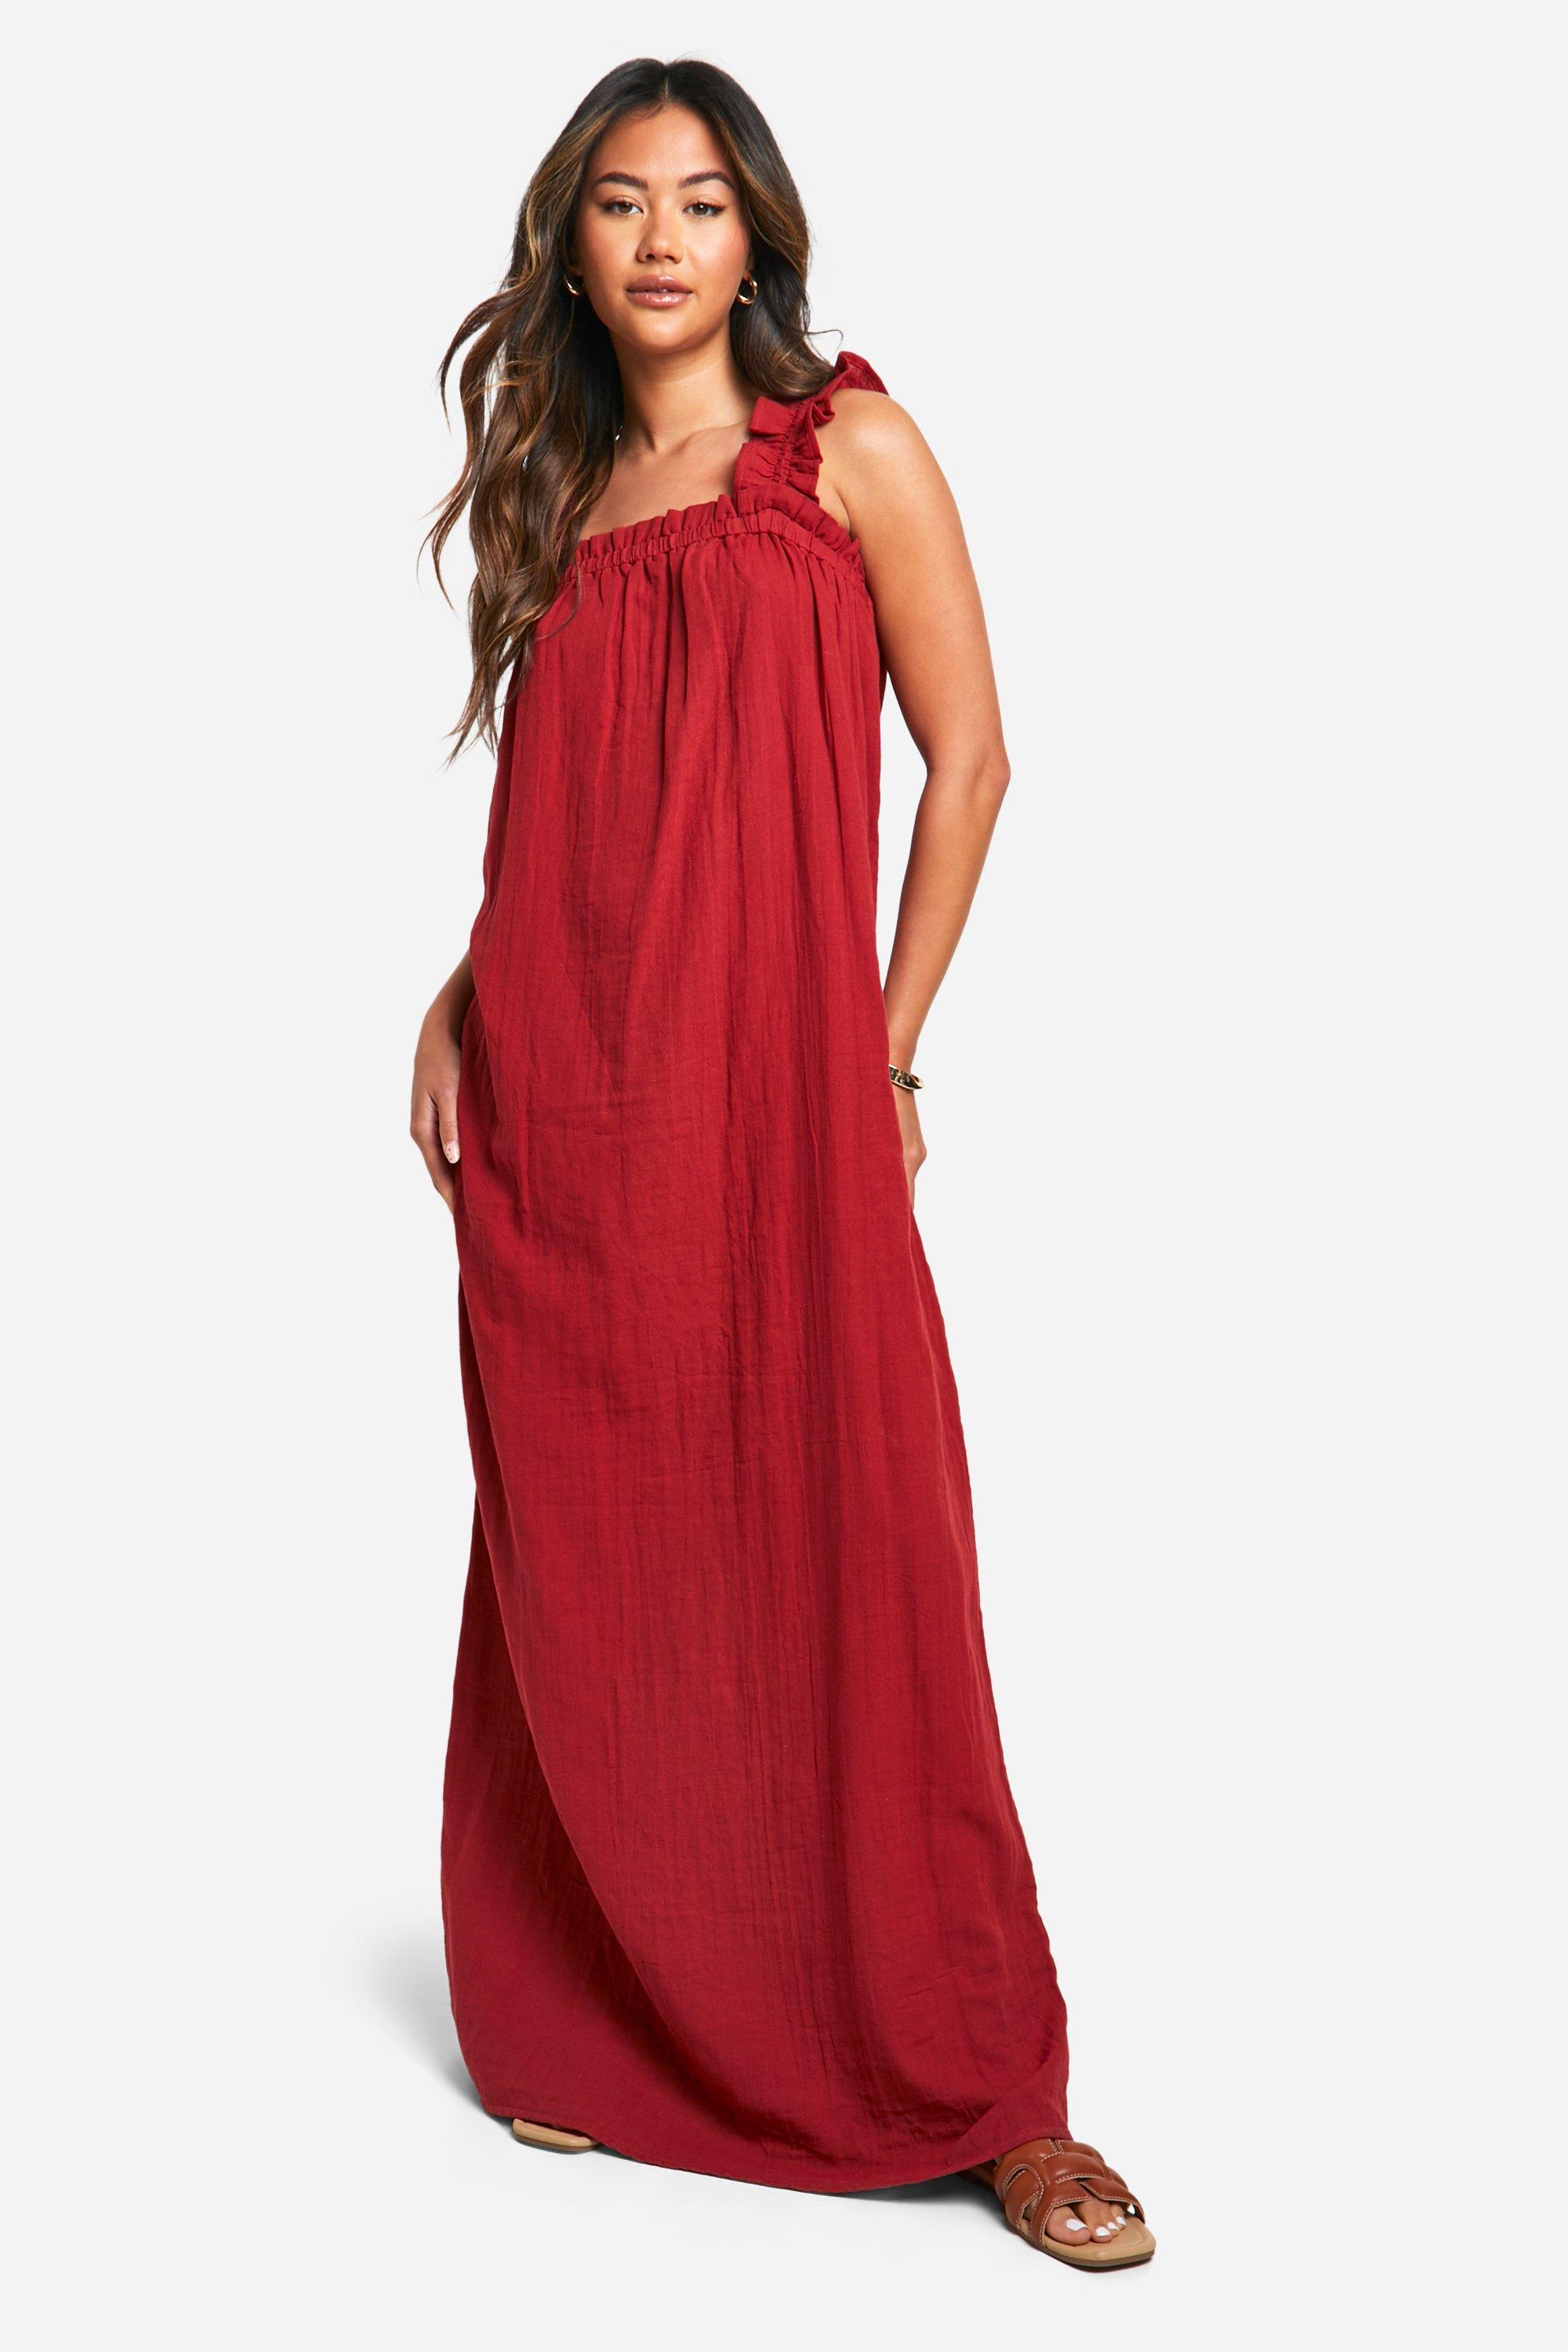 Boohoo Textured Ruffle Strap Maxi Dress, Red